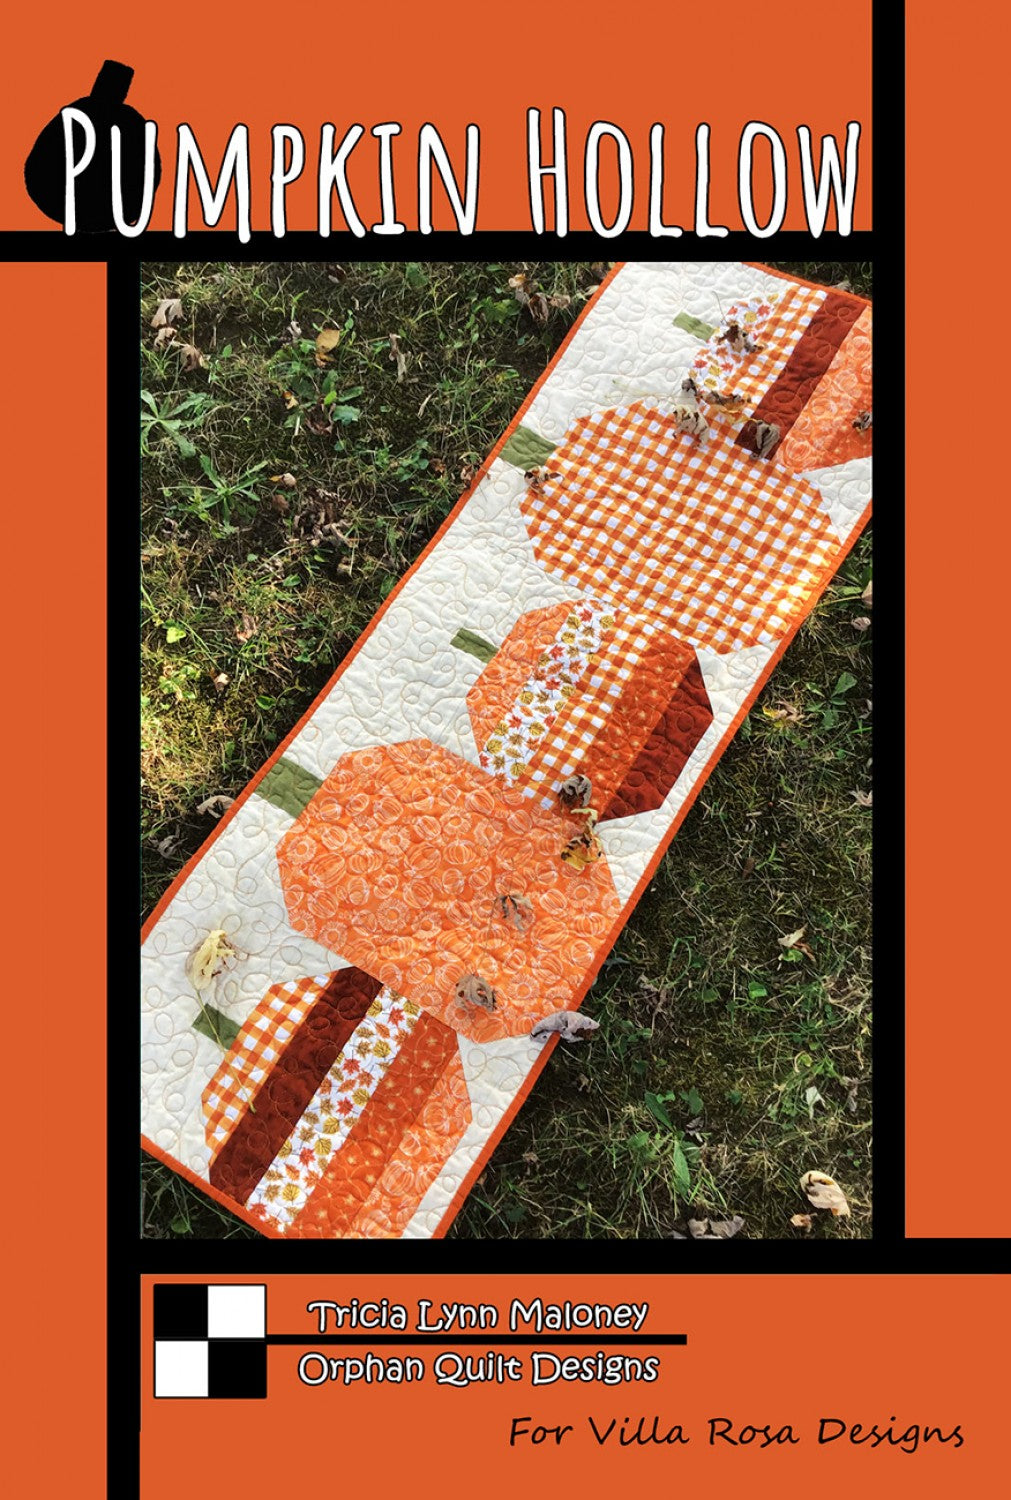 Pumpkin Hollow Quilt Pattern by Villa Rosa Designs - VRDOQ068